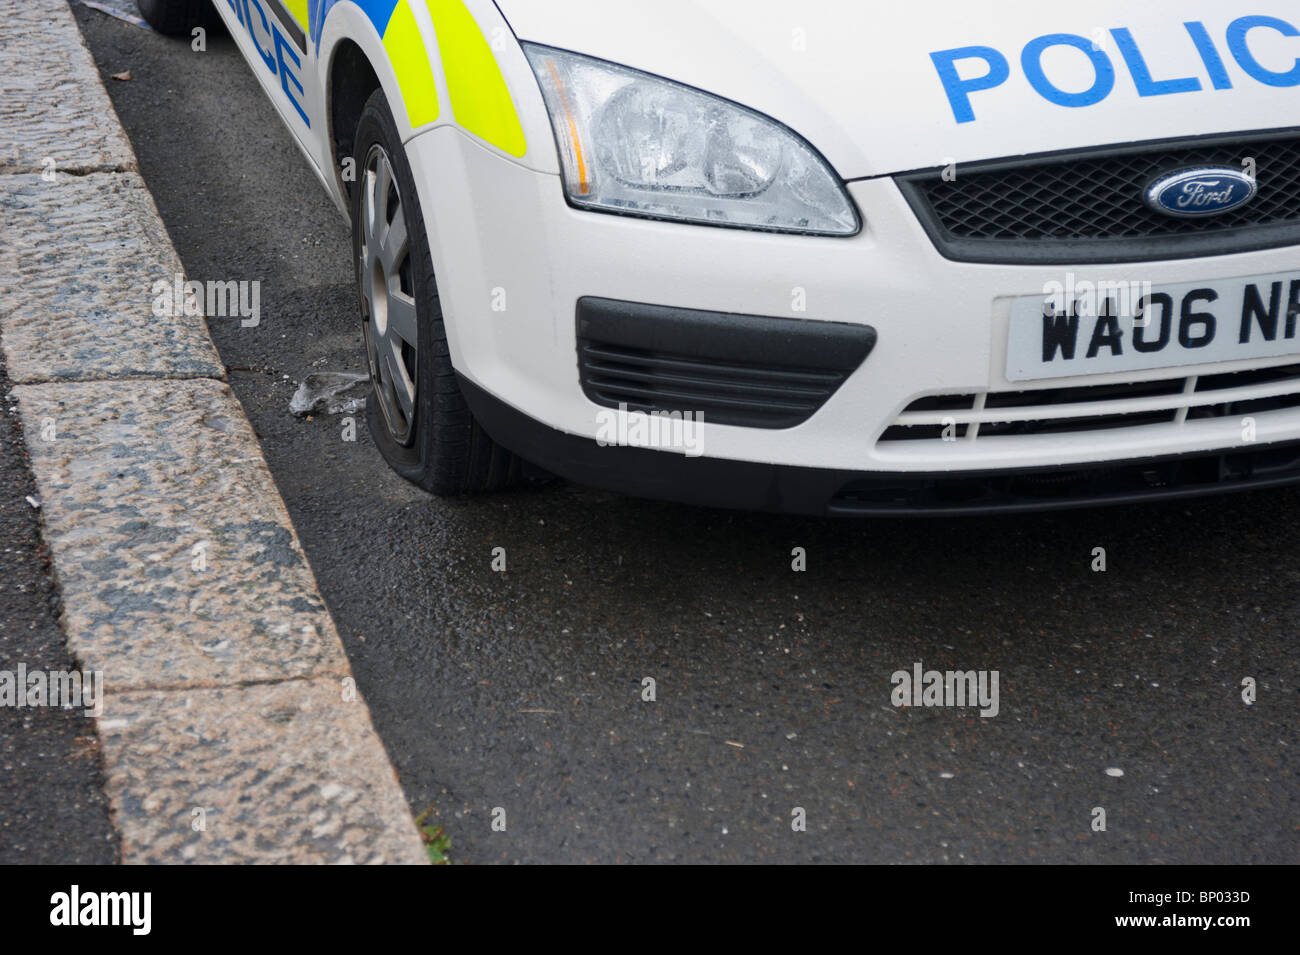 Polic Car with flat tyre, UK Stock Photo